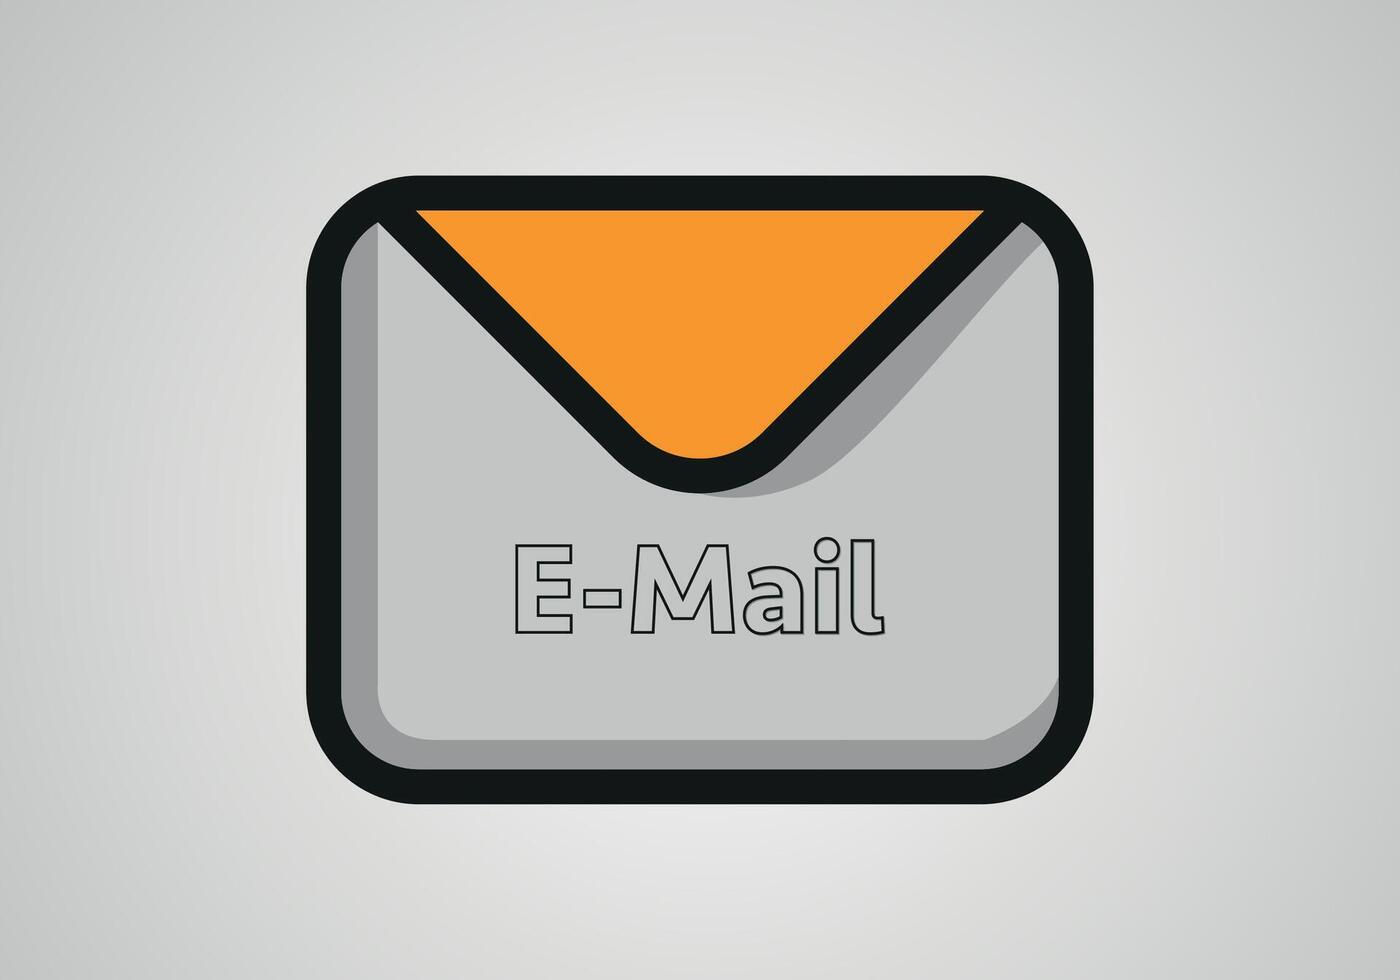 correo sobre icono en plano estilo. recibir correo electrónico letra correo no deseado vector ilustración en blanco antecedentes. correo comunicación negocio concepto.